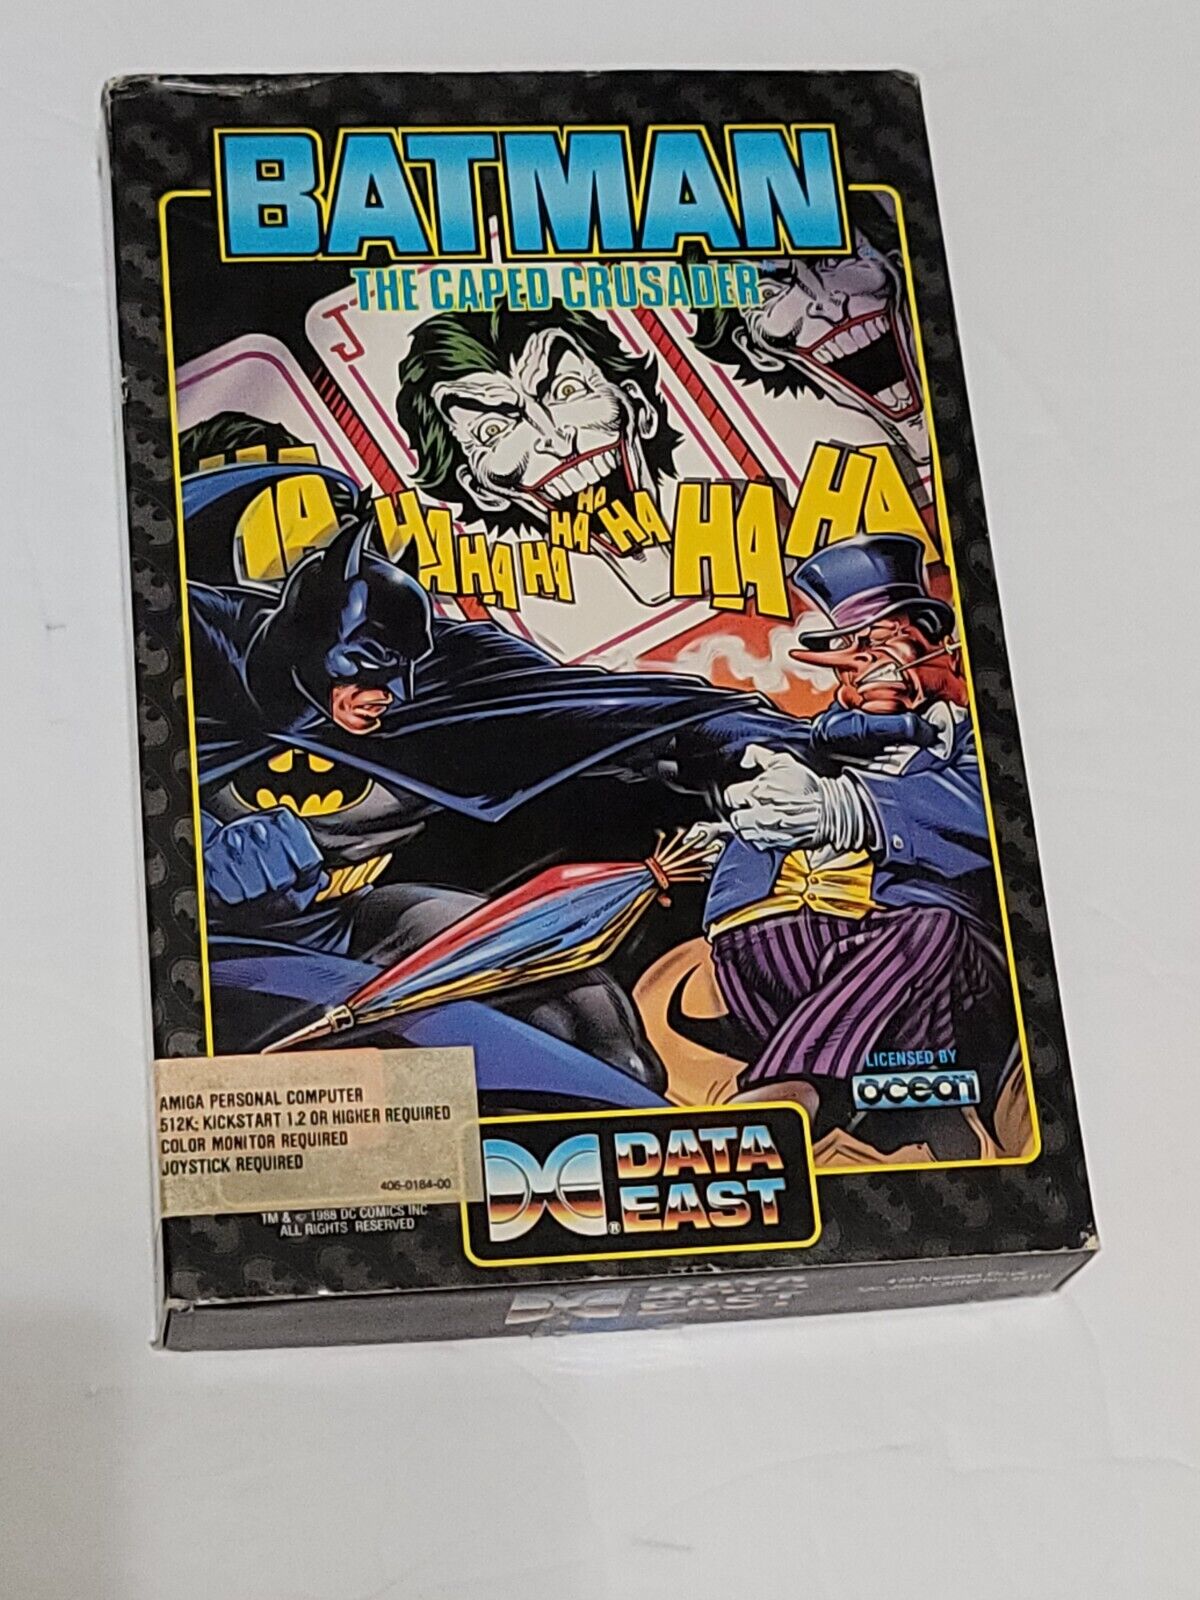 Batman The Caped Crusader Amiga 500 1000 2000 Game 1988 Bat Man Data East